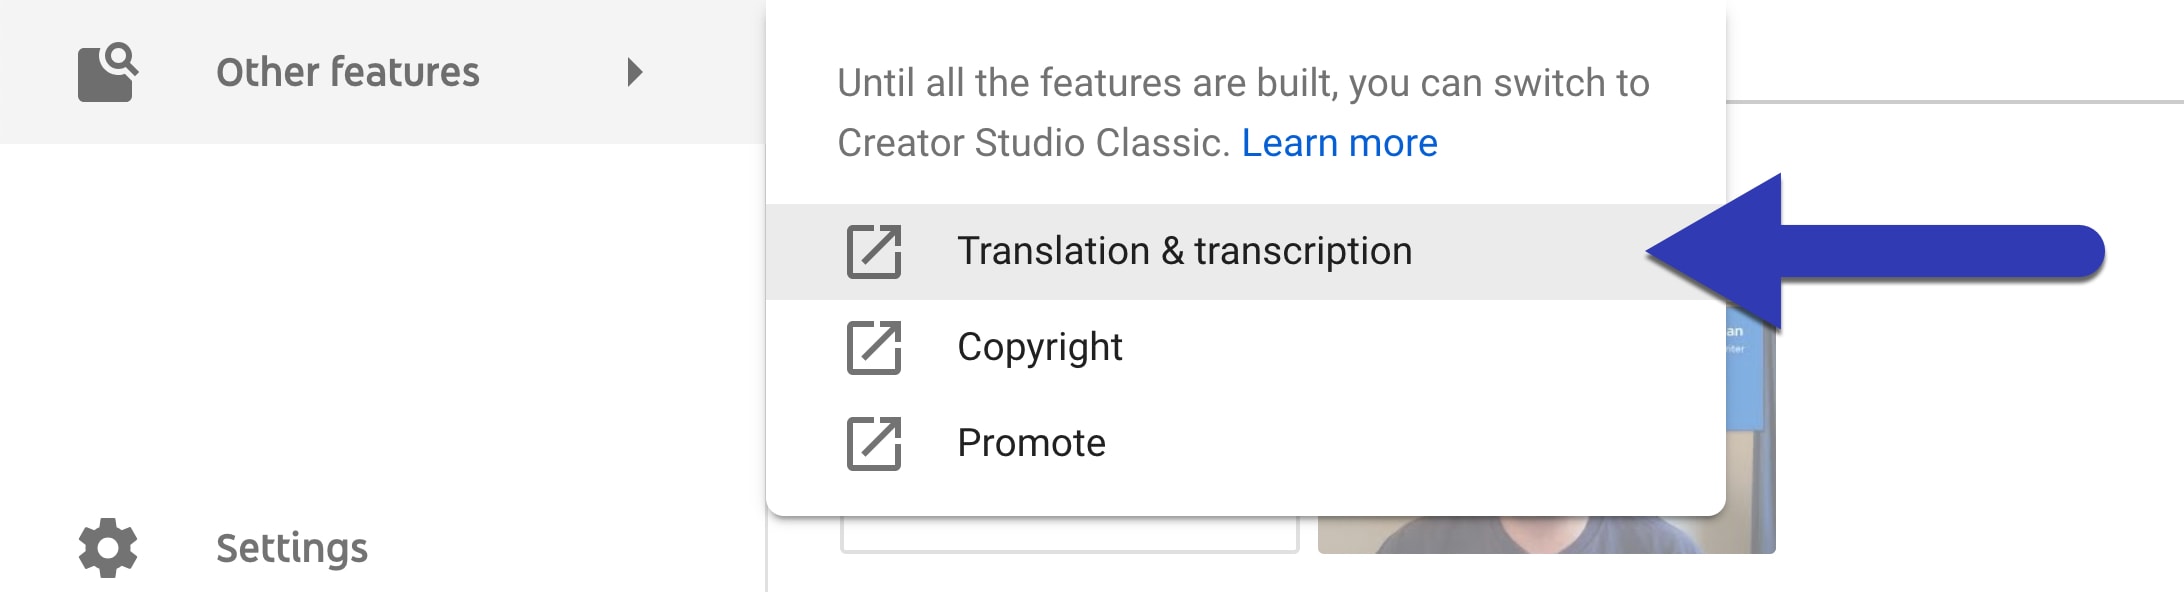 YouTube Translation & transcription option